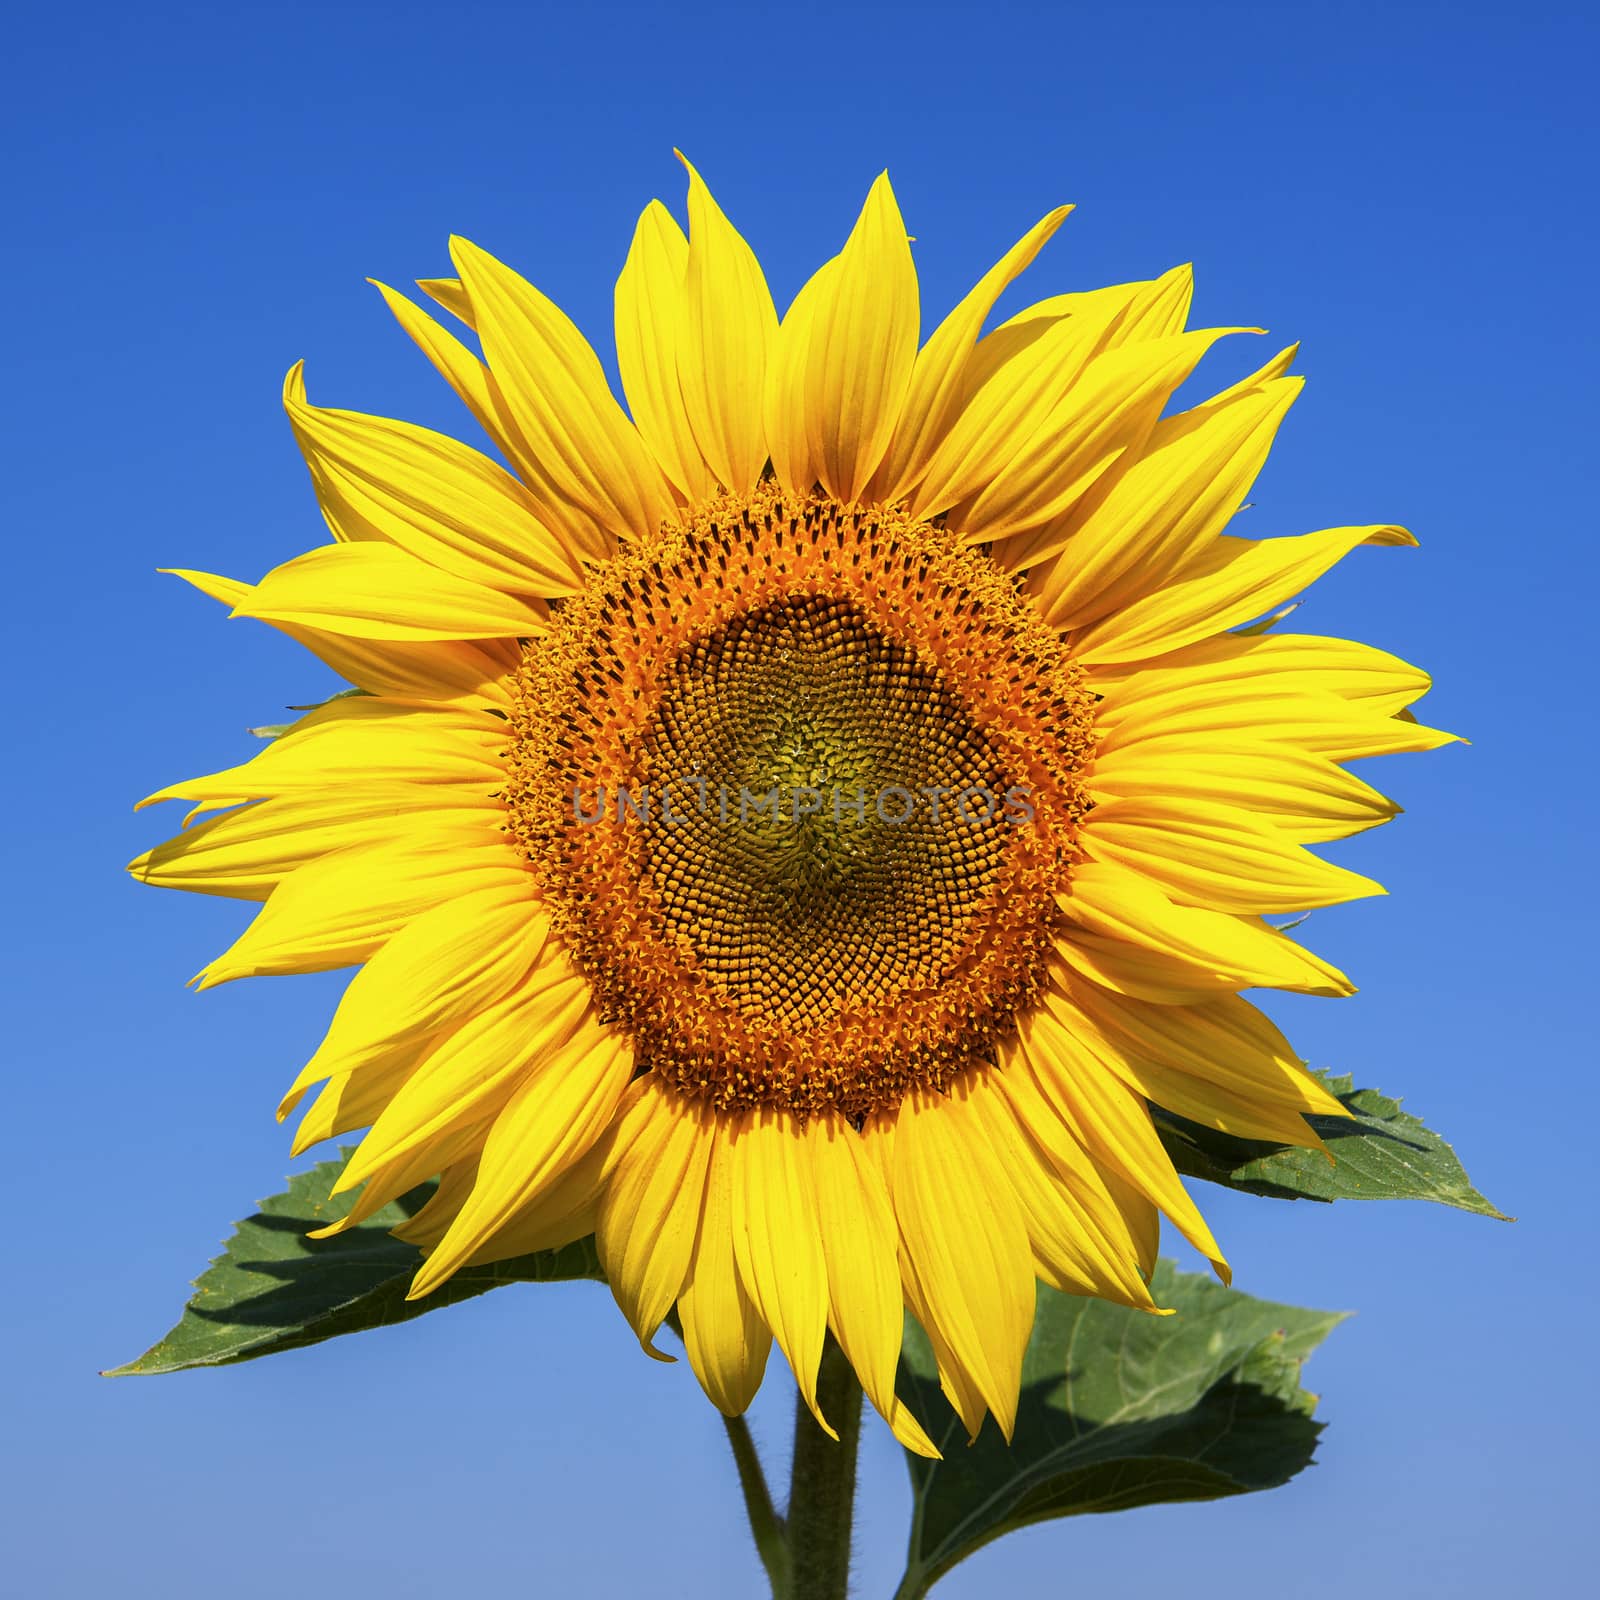 Sunflower on a background of blue sky